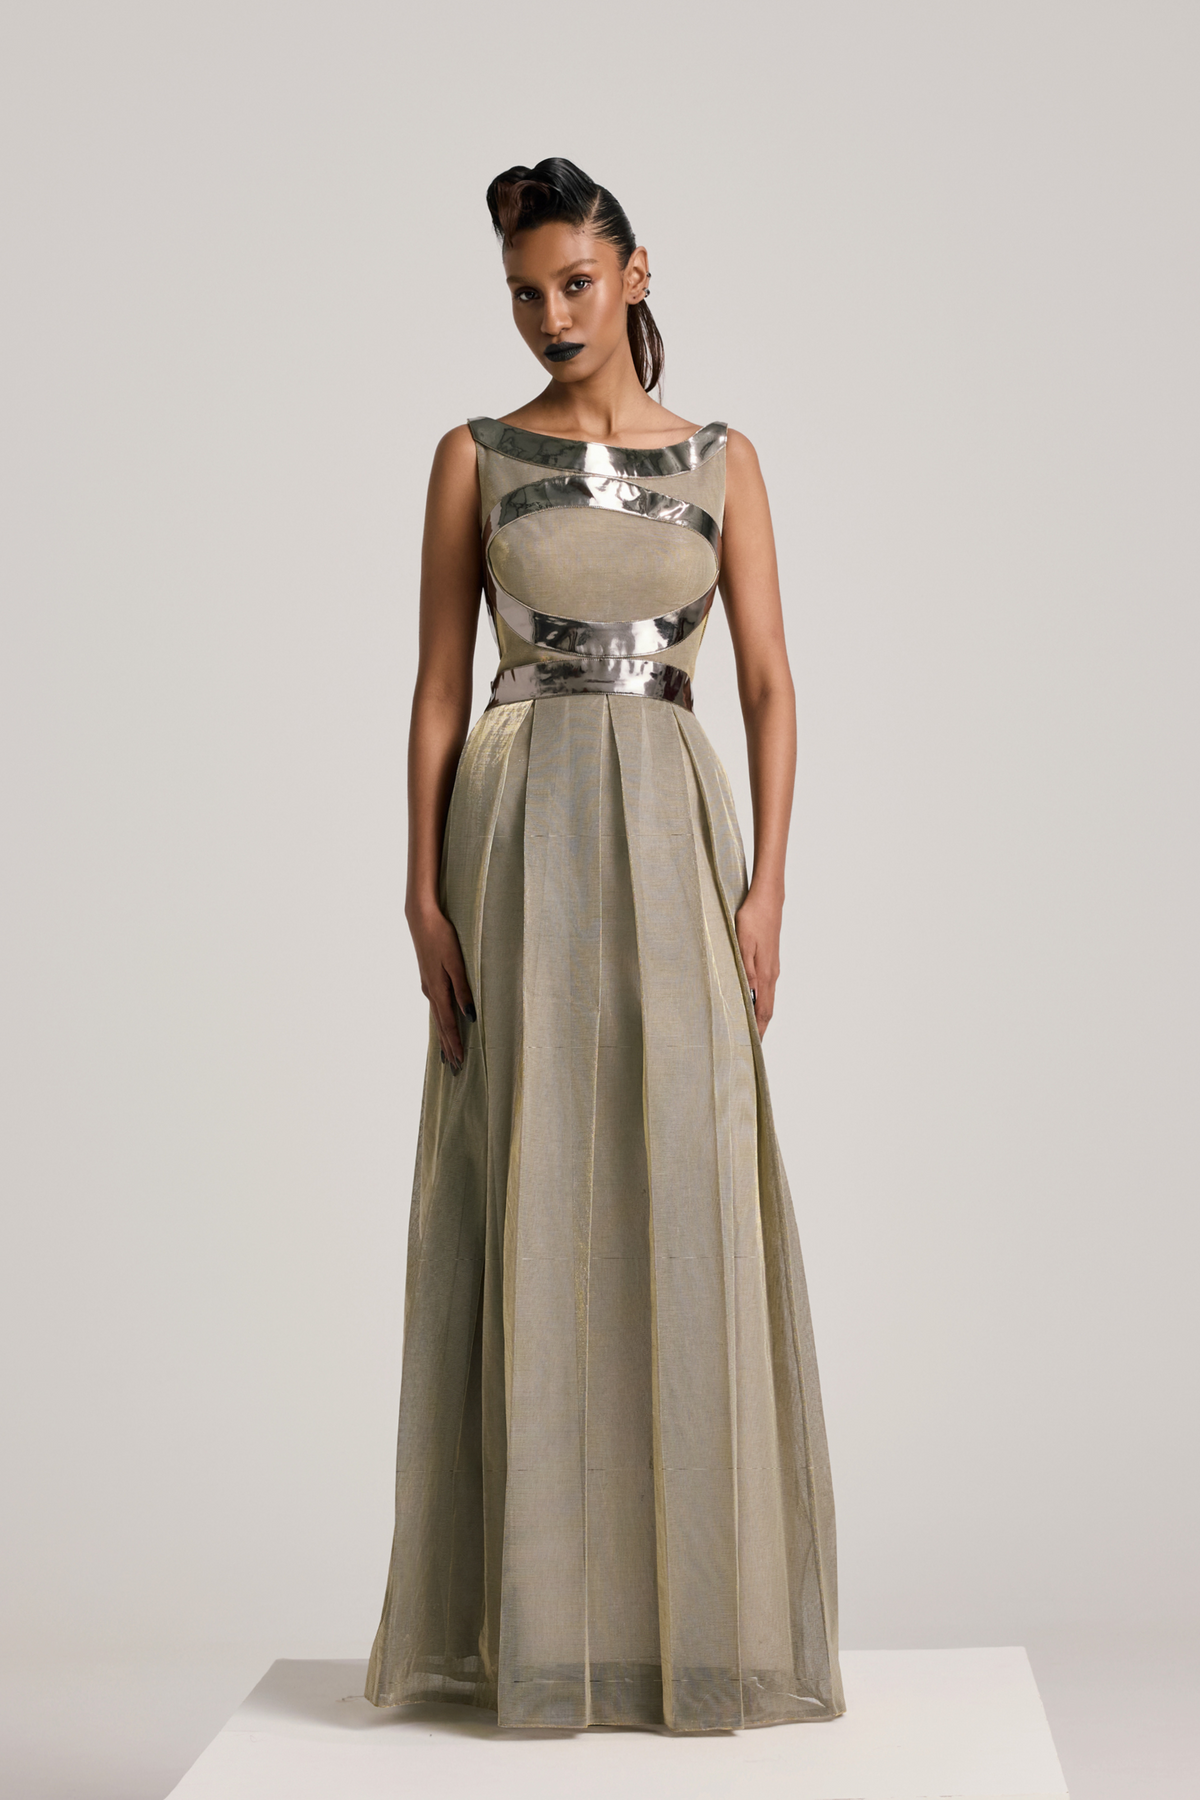 Metallic Pleated Dress